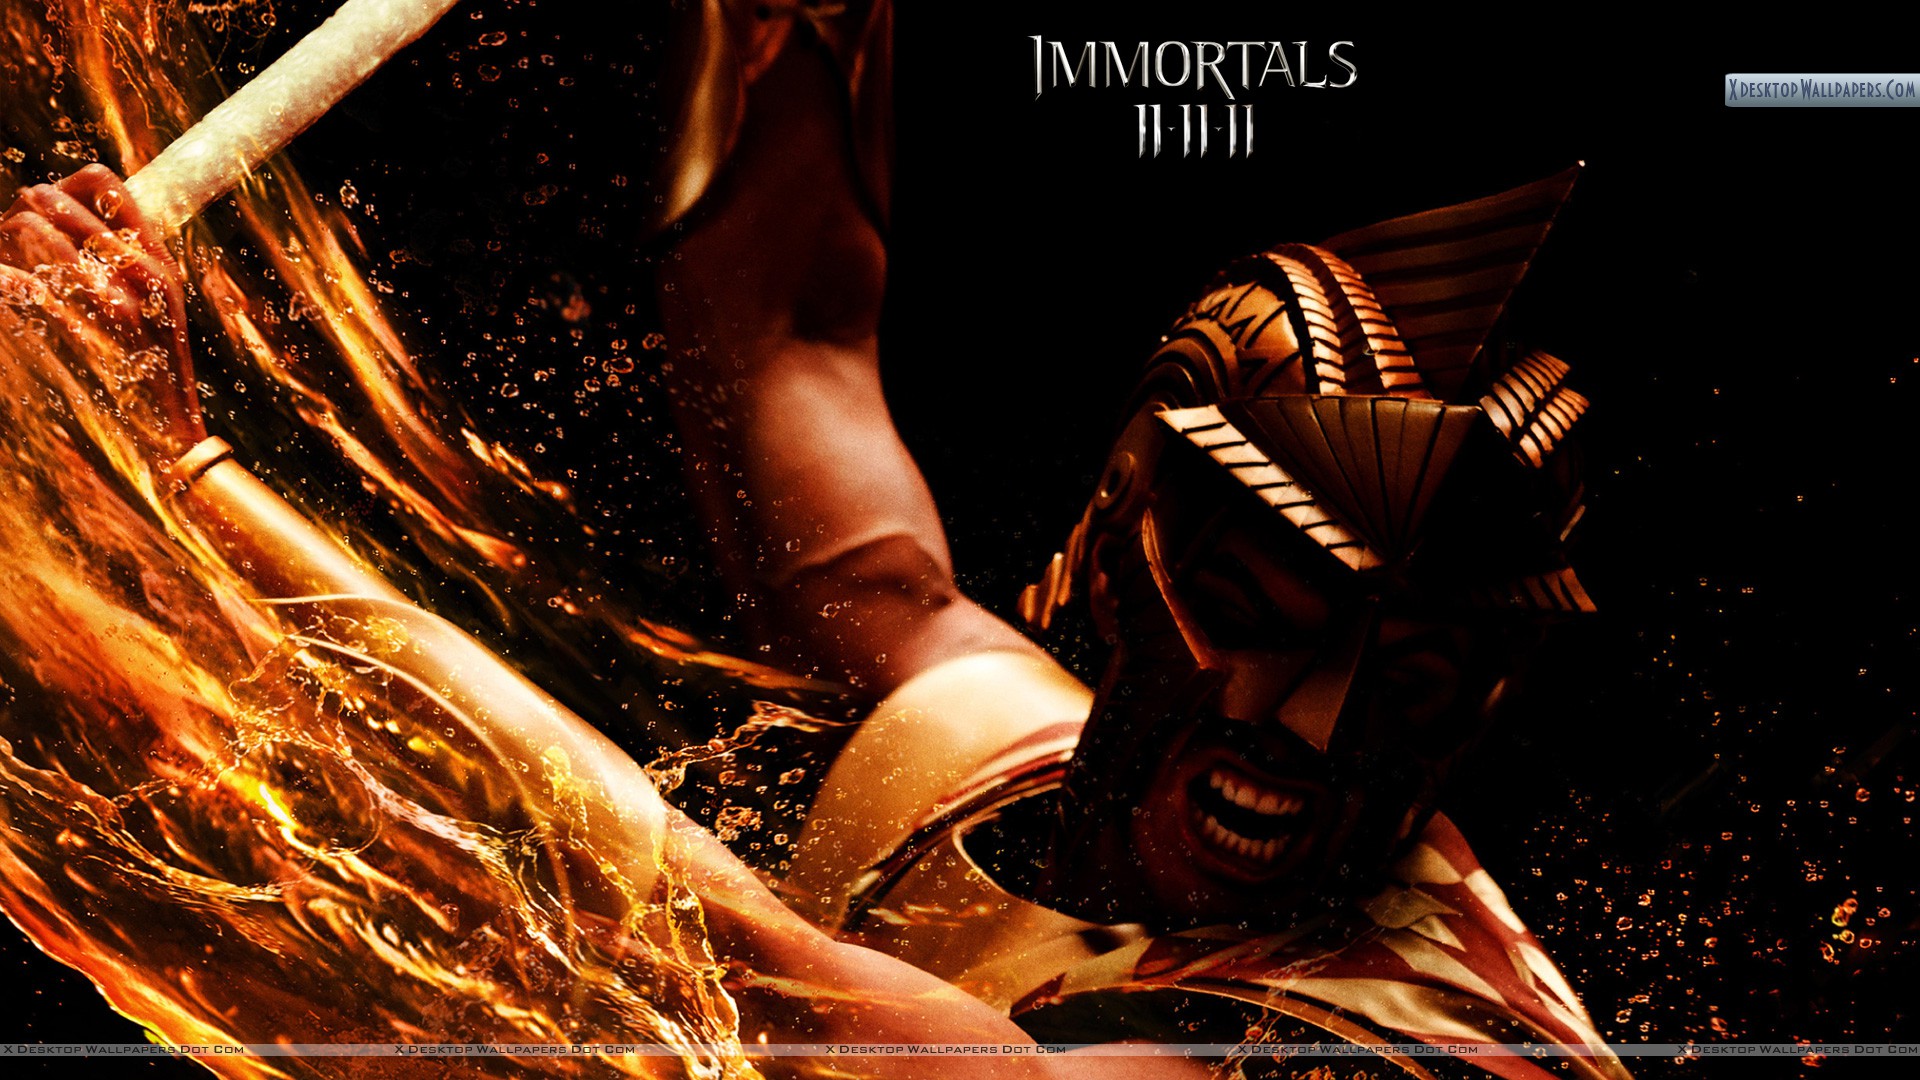 View Wallpaper Details - Immortals Movie Poster , HD Wallpaper & Backgrounds